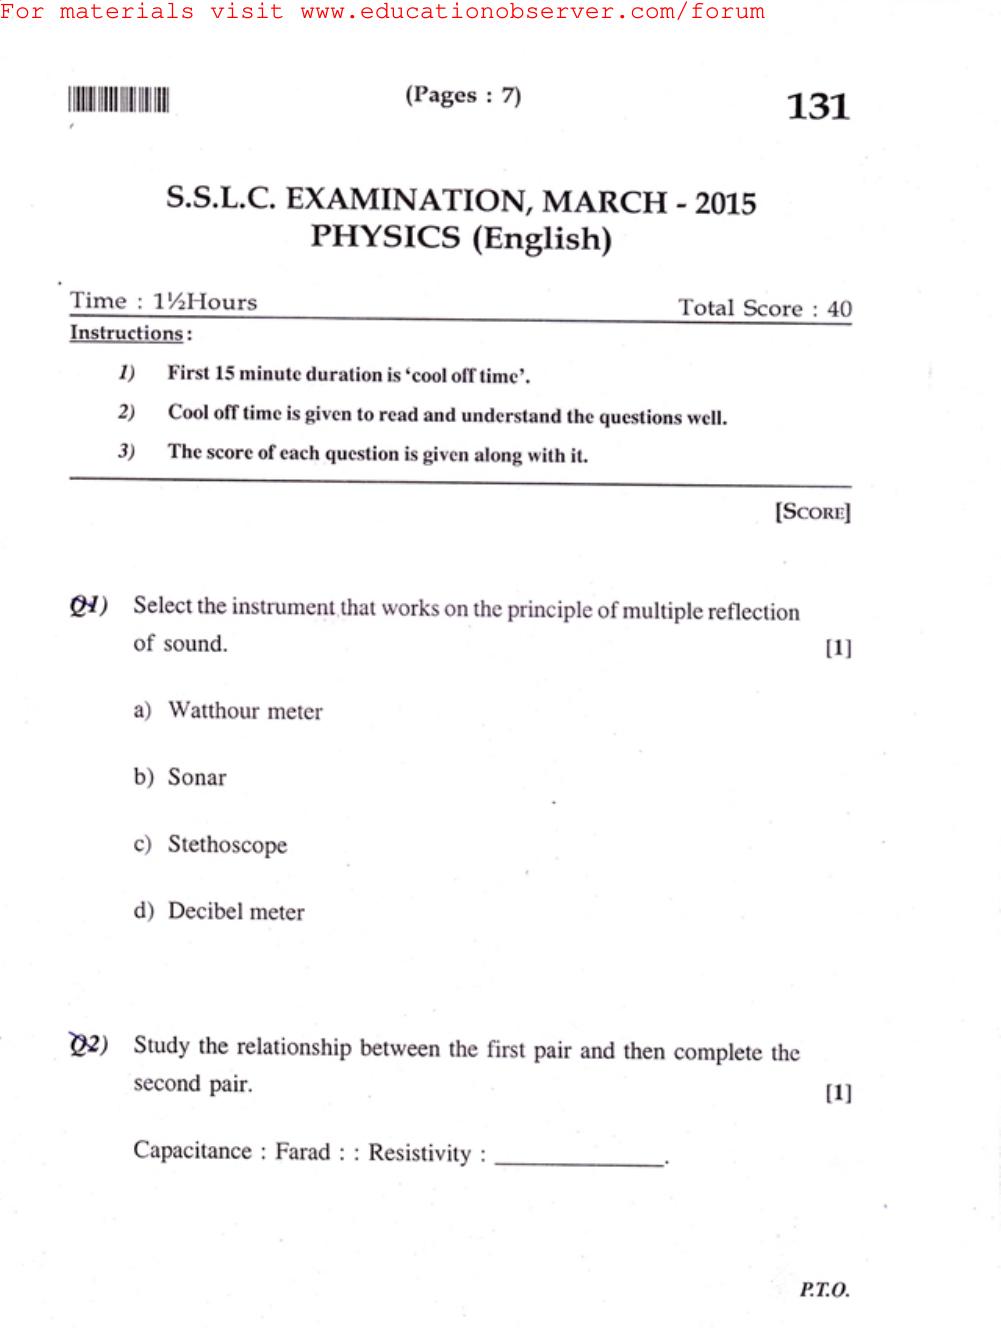 Kerala SSLC 2015 Physics Question Paper - Page 1